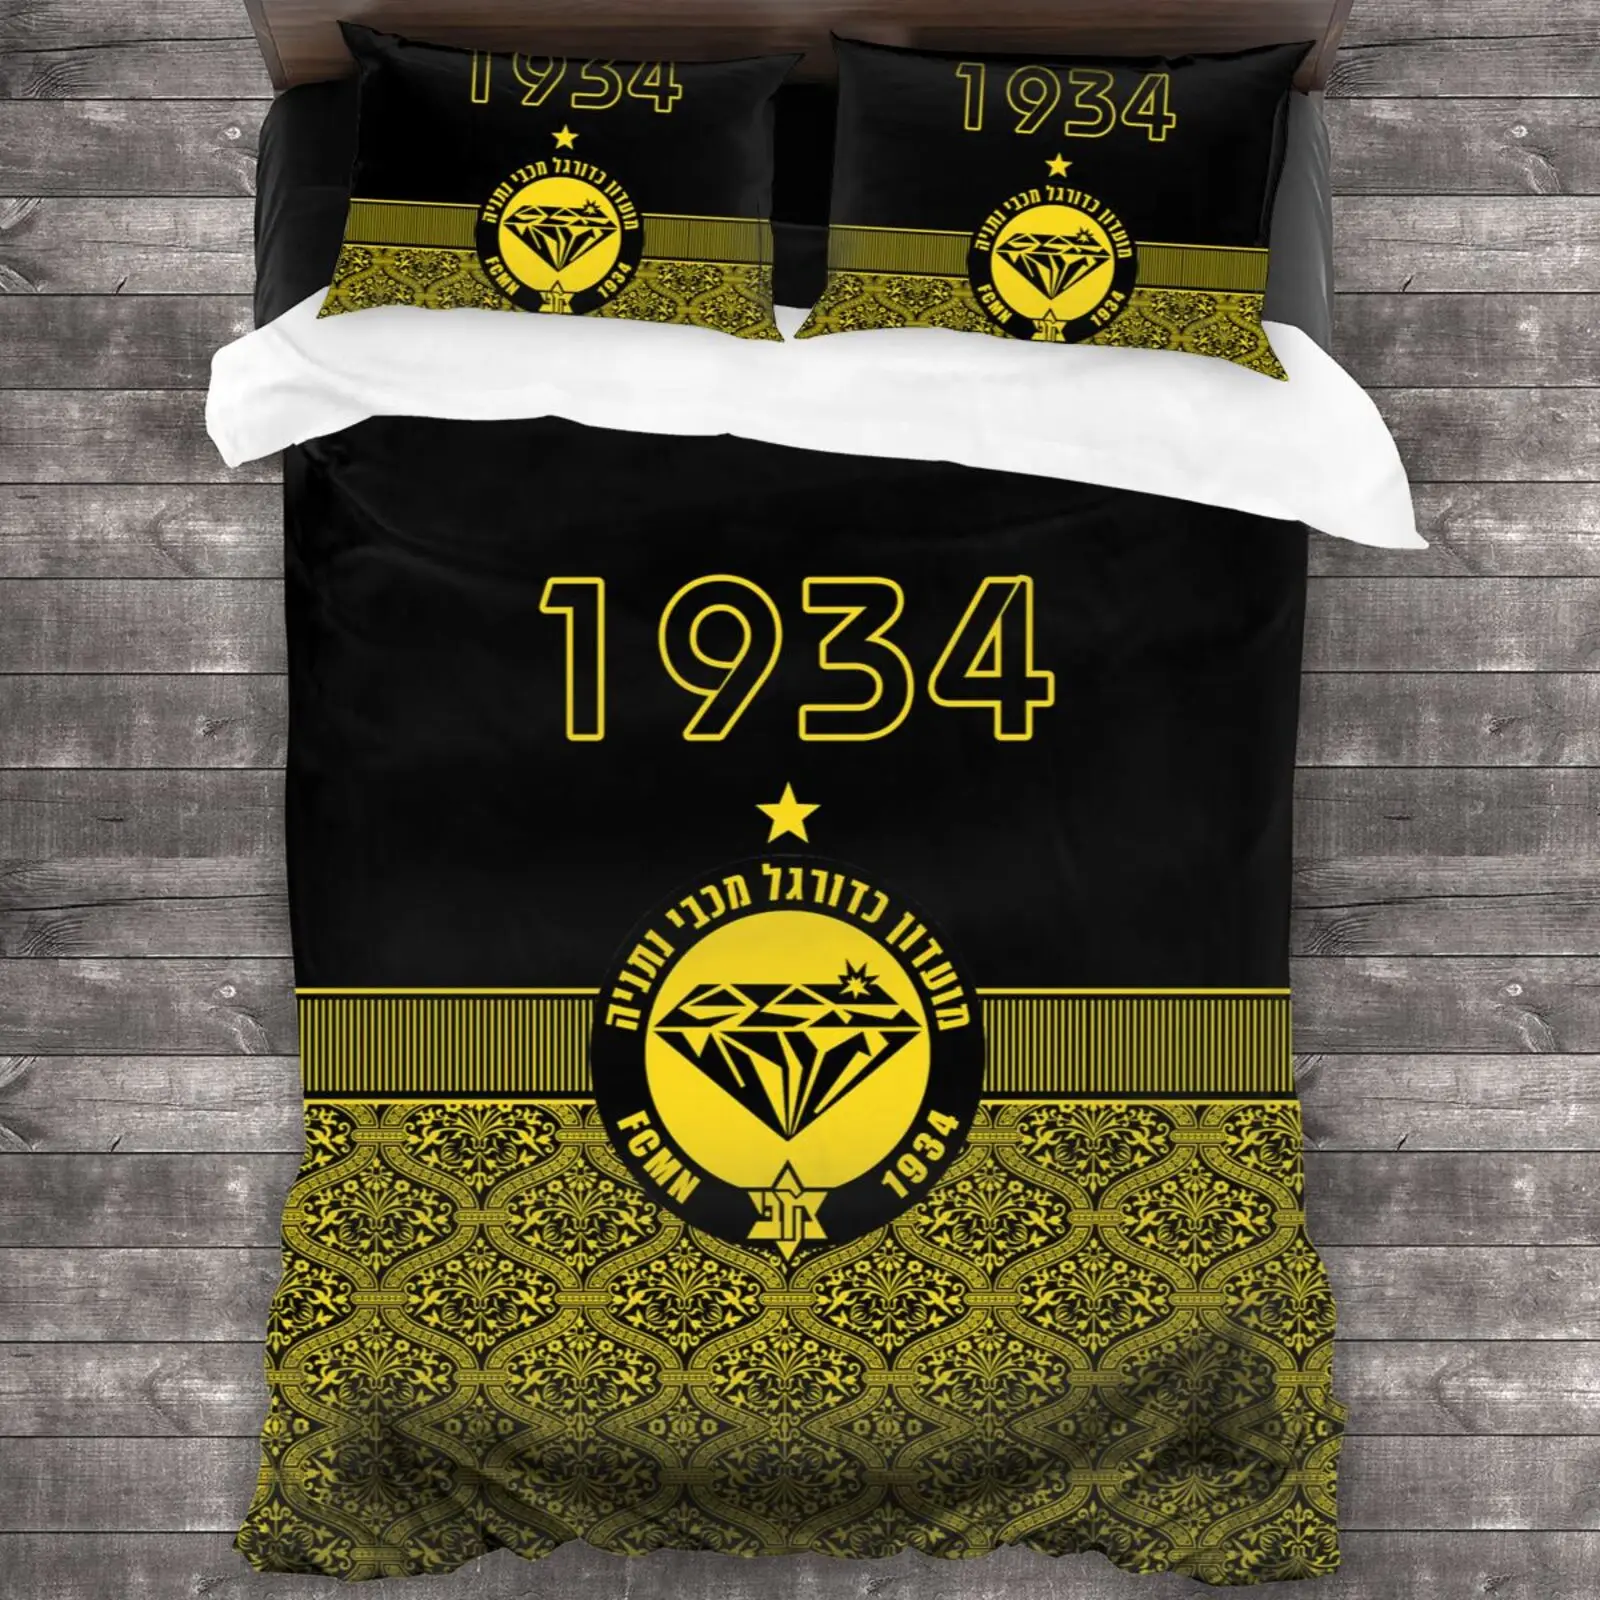 Israel Maccabi Netanya Fc Bedding Set Duvet Cover Pillowcases Comforter Bedding Sets Bedclothes duvetcover set